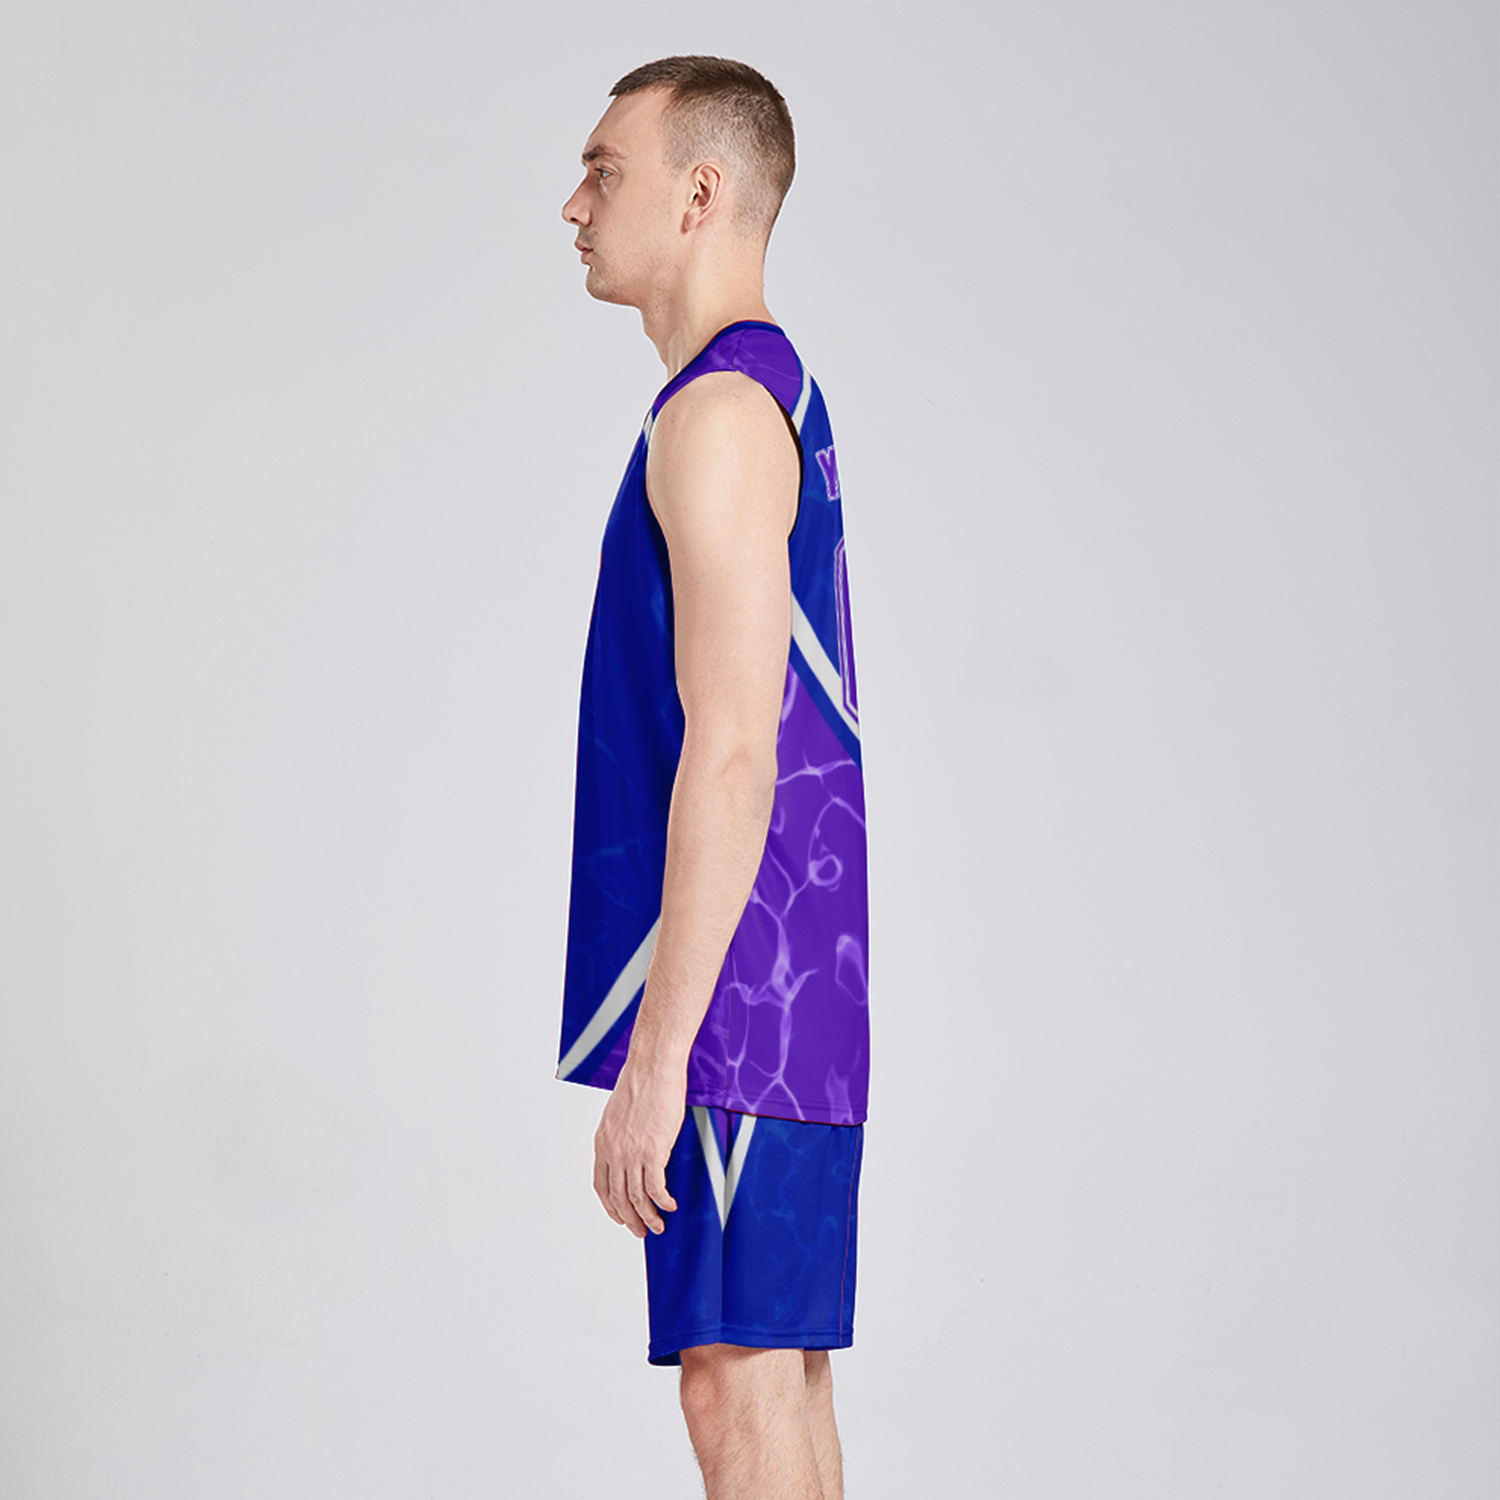 Digital Printing Custom Sports Suits Men Newest Best Basketball Jerseys Basketball Jerseys Shirts Tops Sportswear